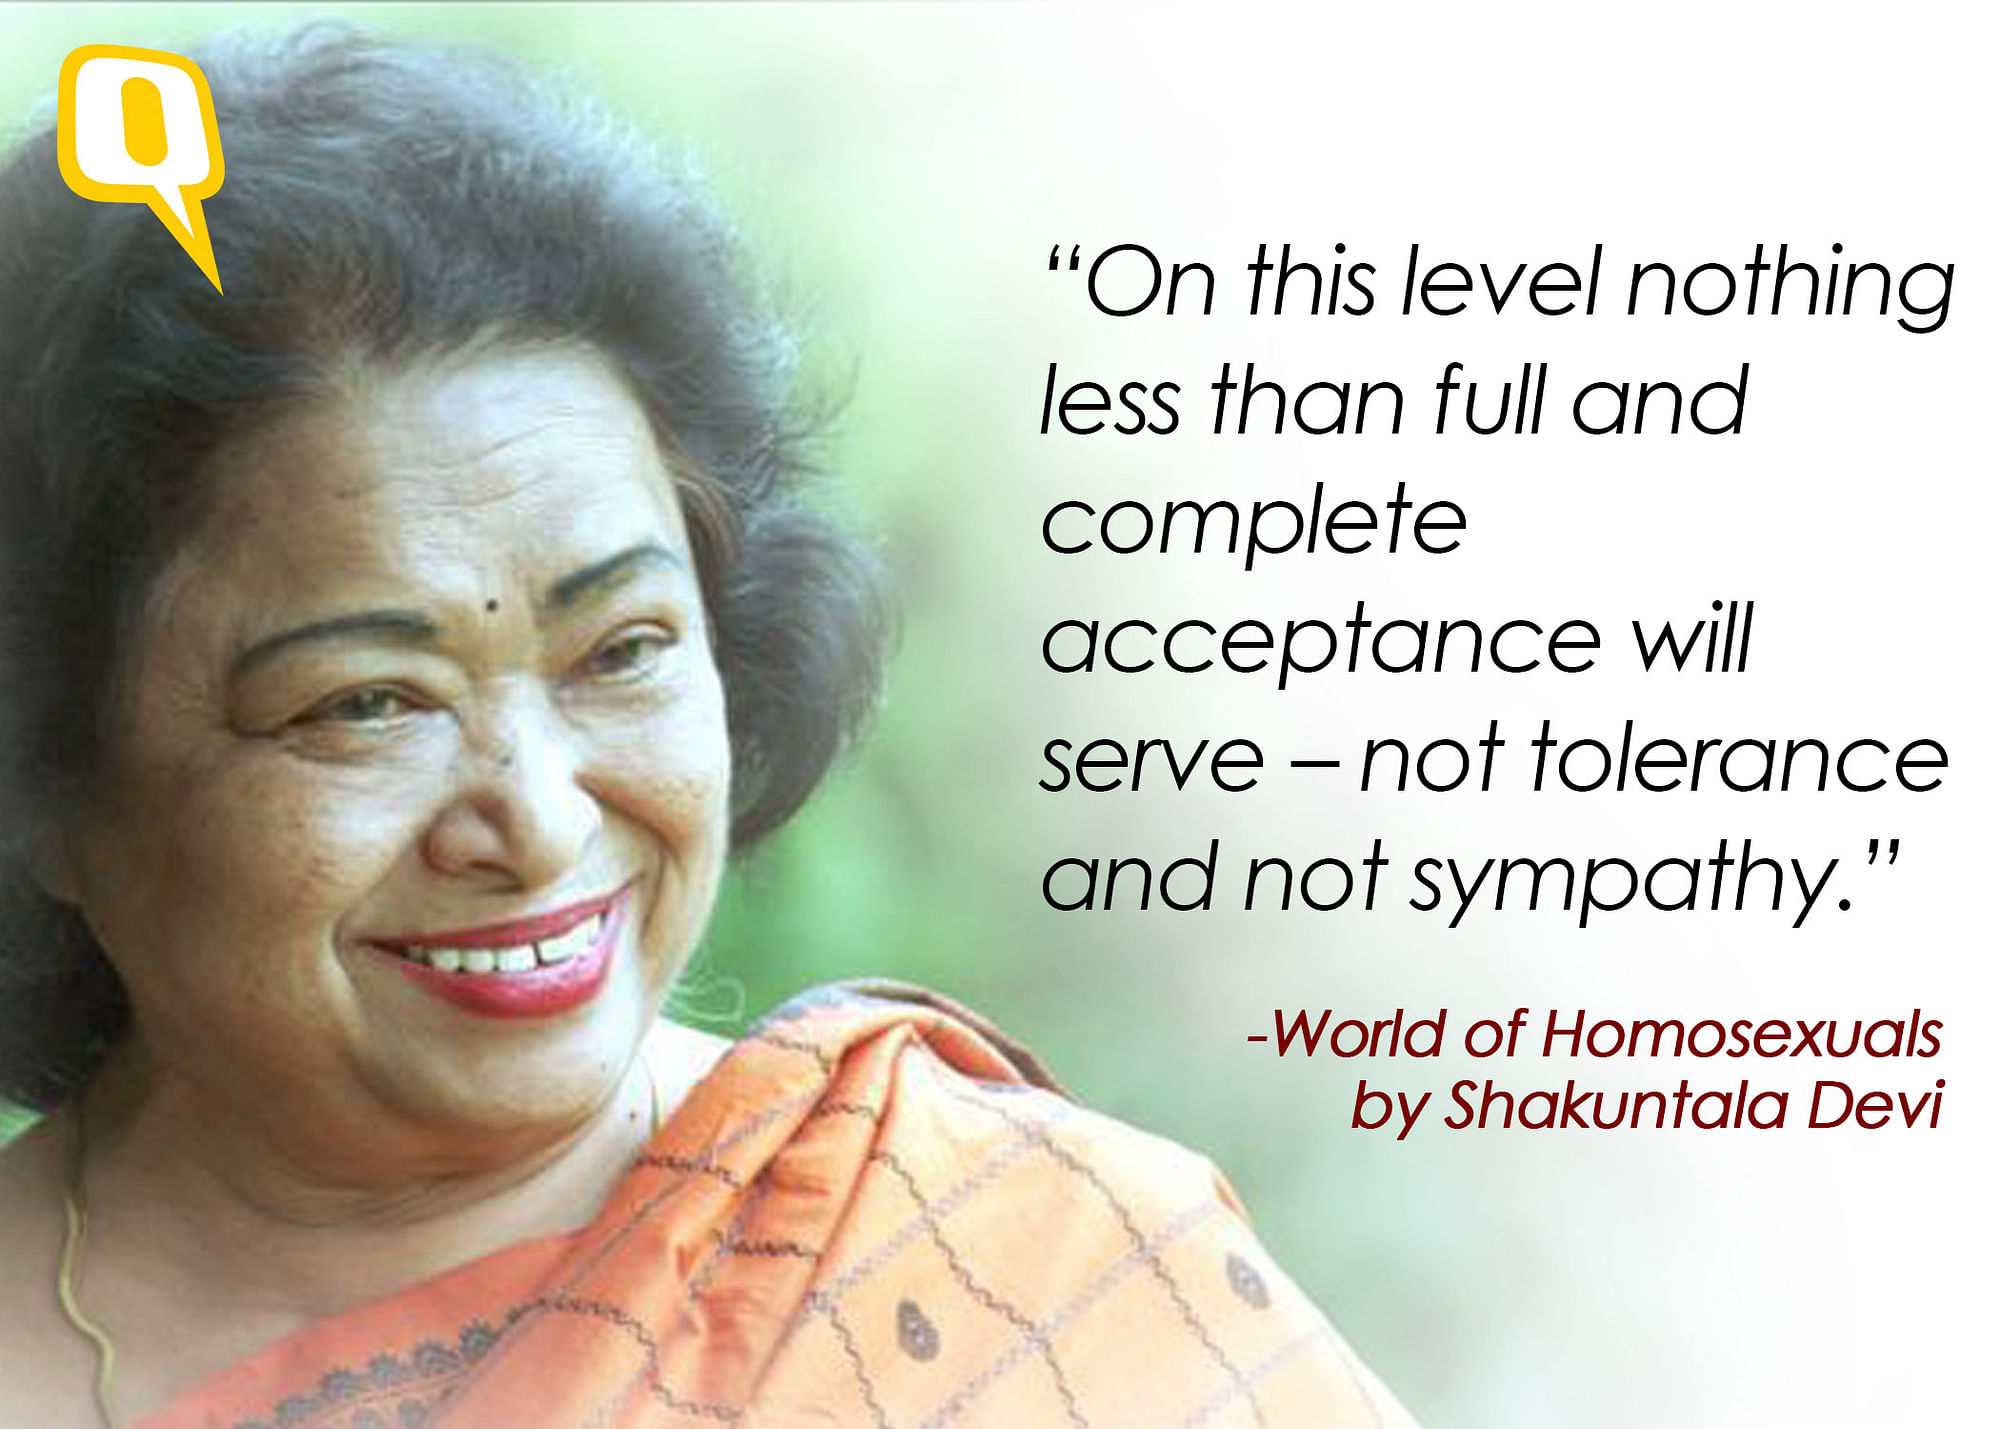 Math Genius Shakuntala Devi s Progressive Views On Homosexuality